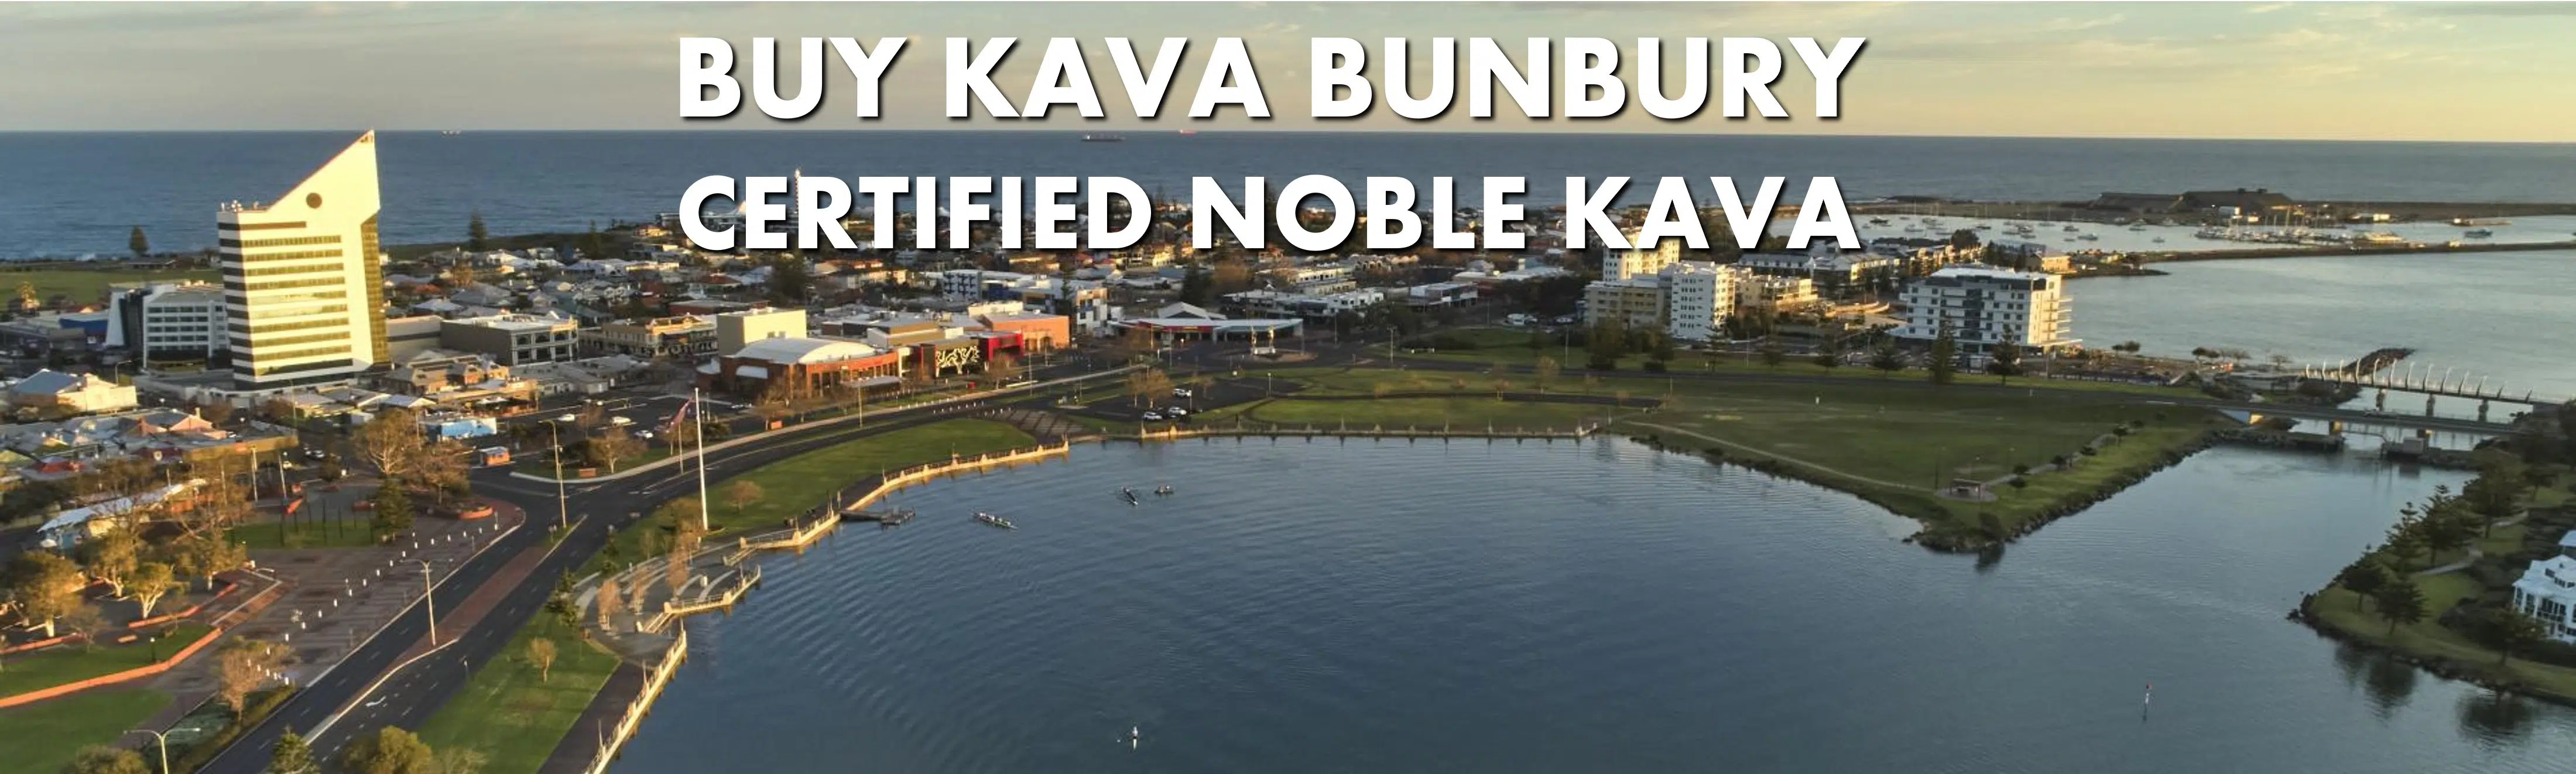 Aerial view of Bunbury with caption Buy Kava Bunbury Certified Noble Kava